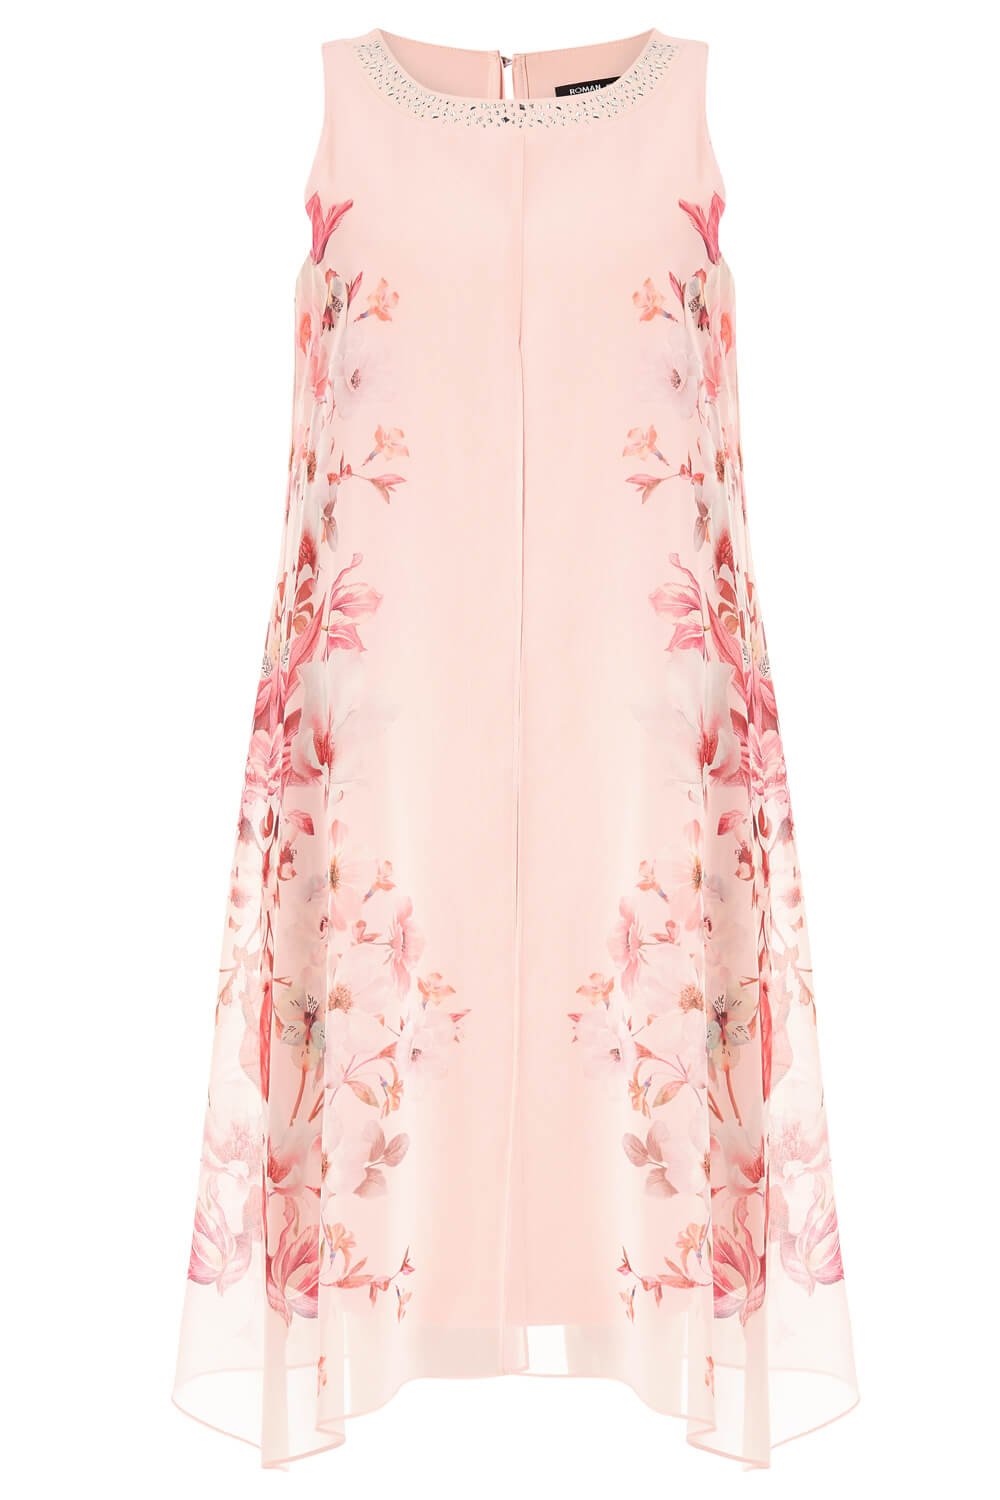 Light Pink Floral Chiffon Layer Embellished Shift Dress, Image 4 of 4